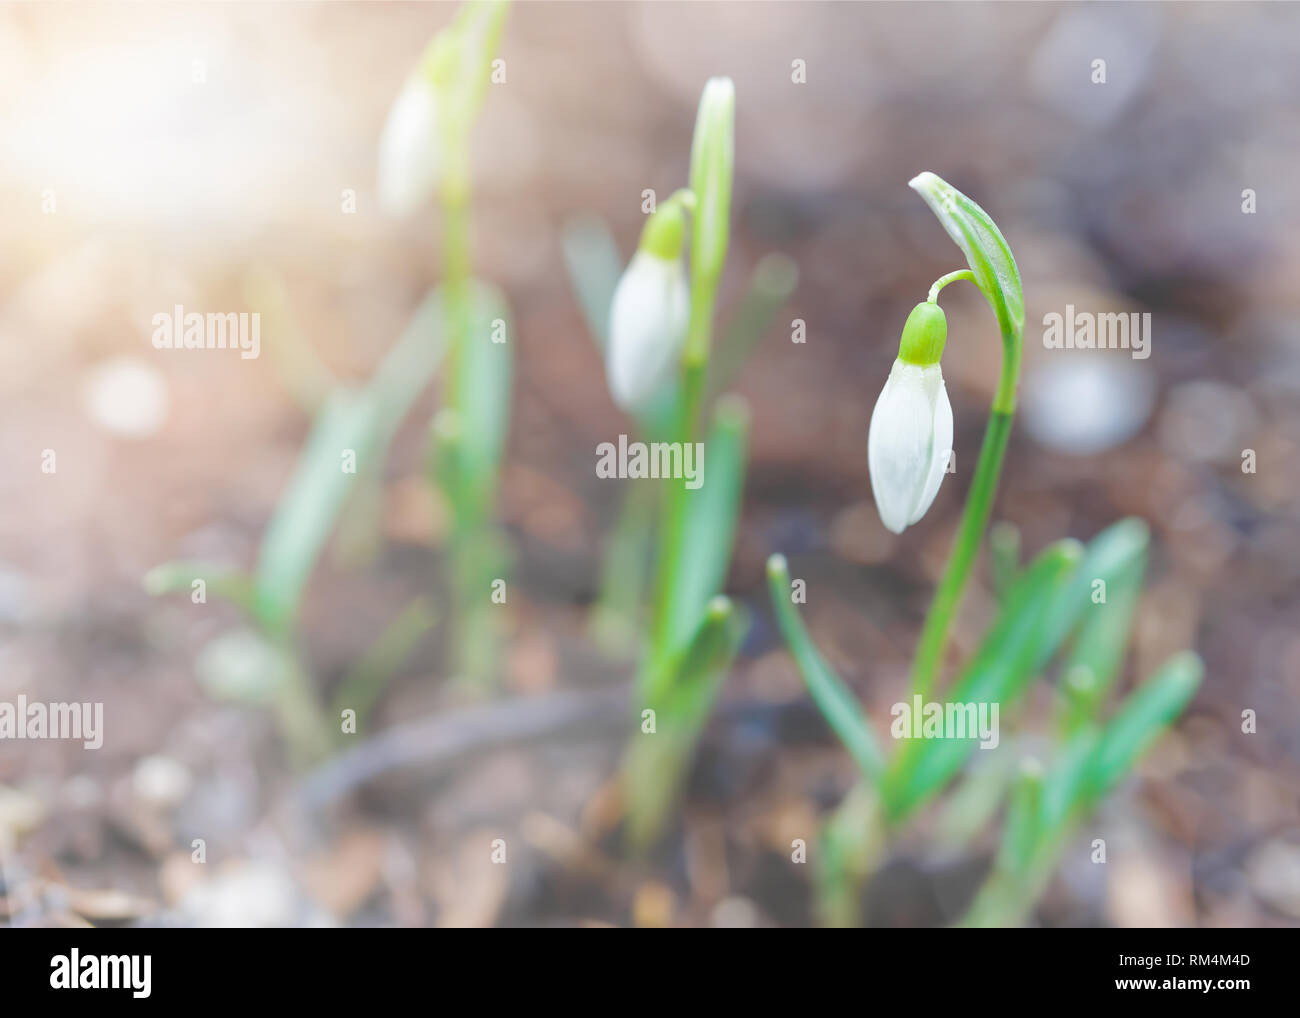 Snowdrops emerging in the spring garden. Stock Photo